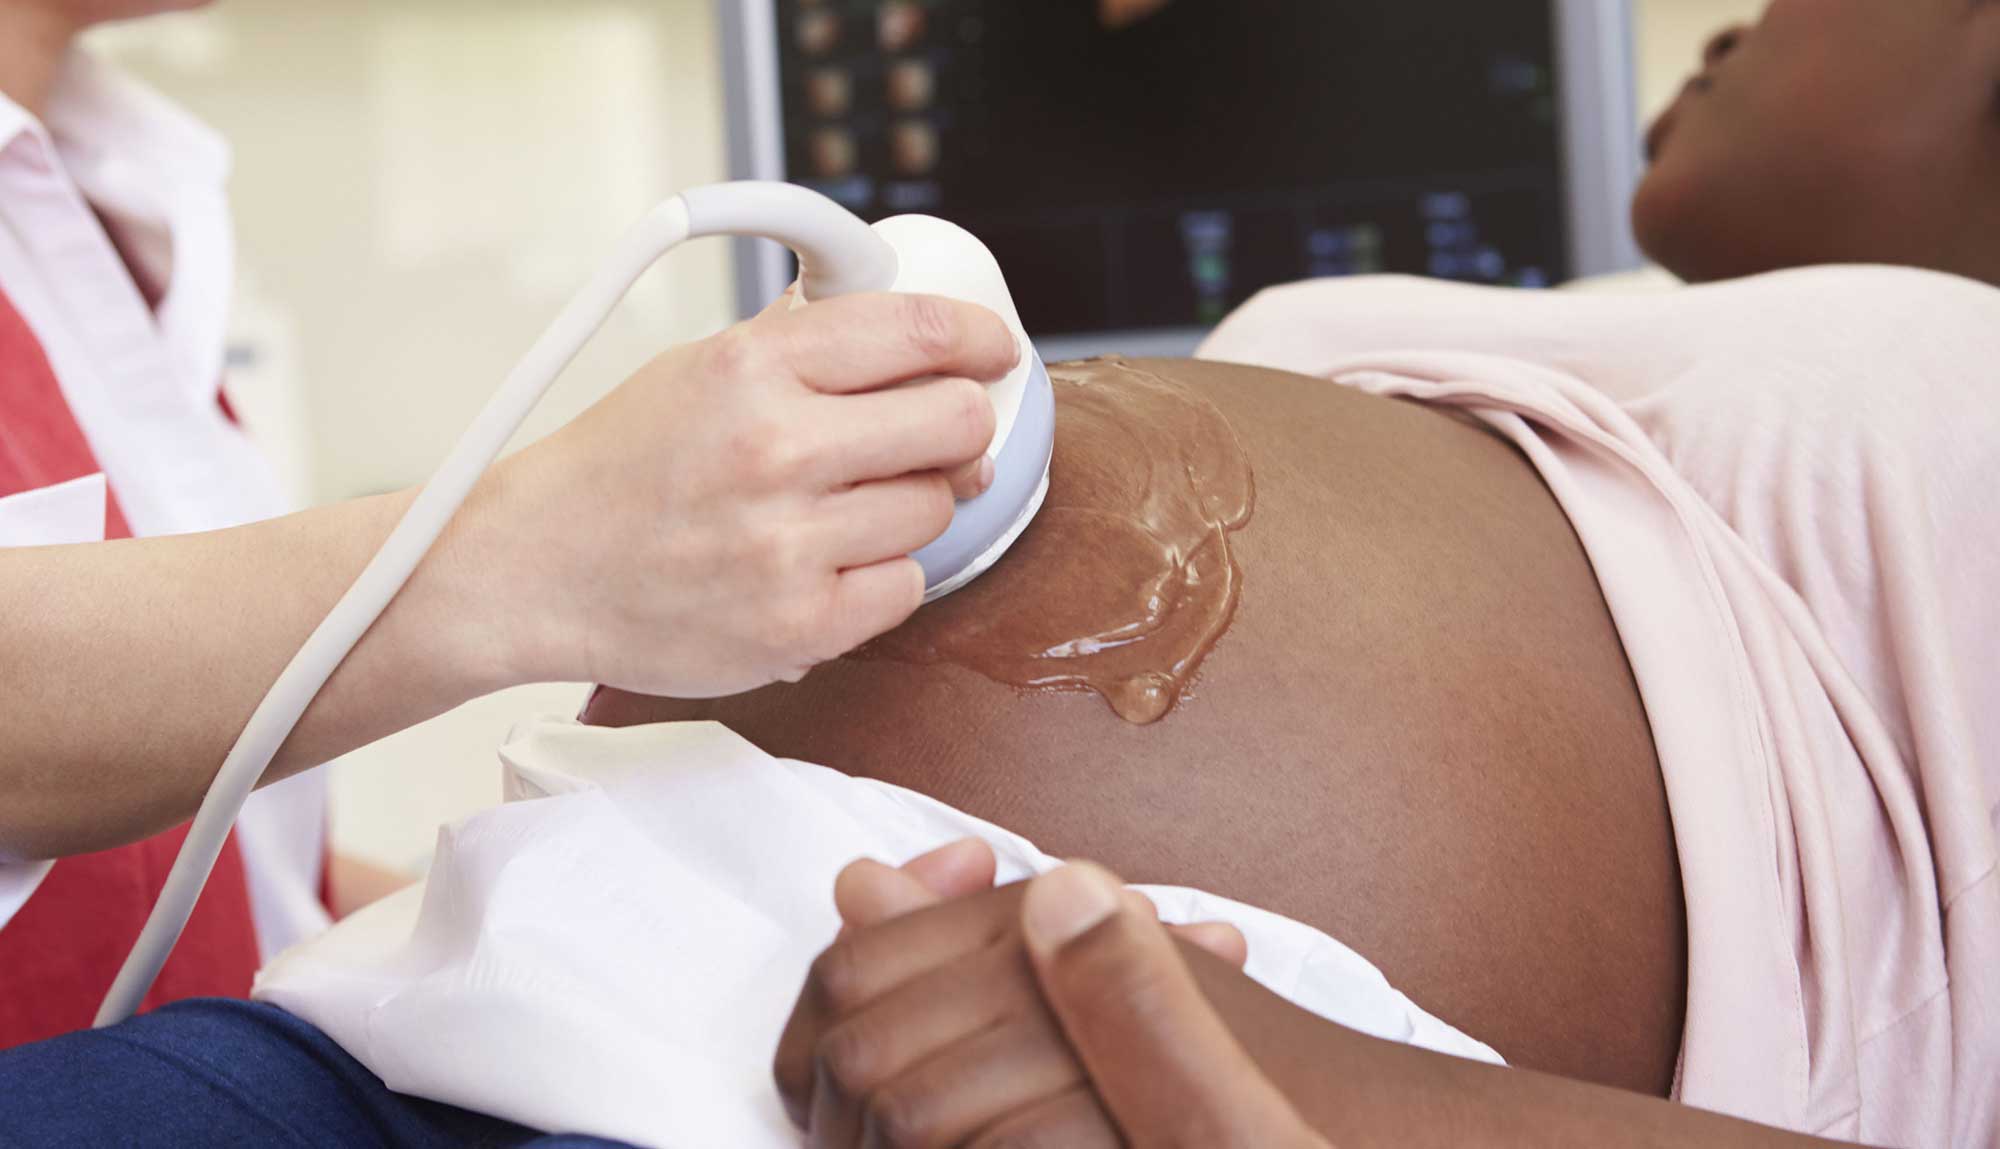 A pregnant woman gets an ultrasound.